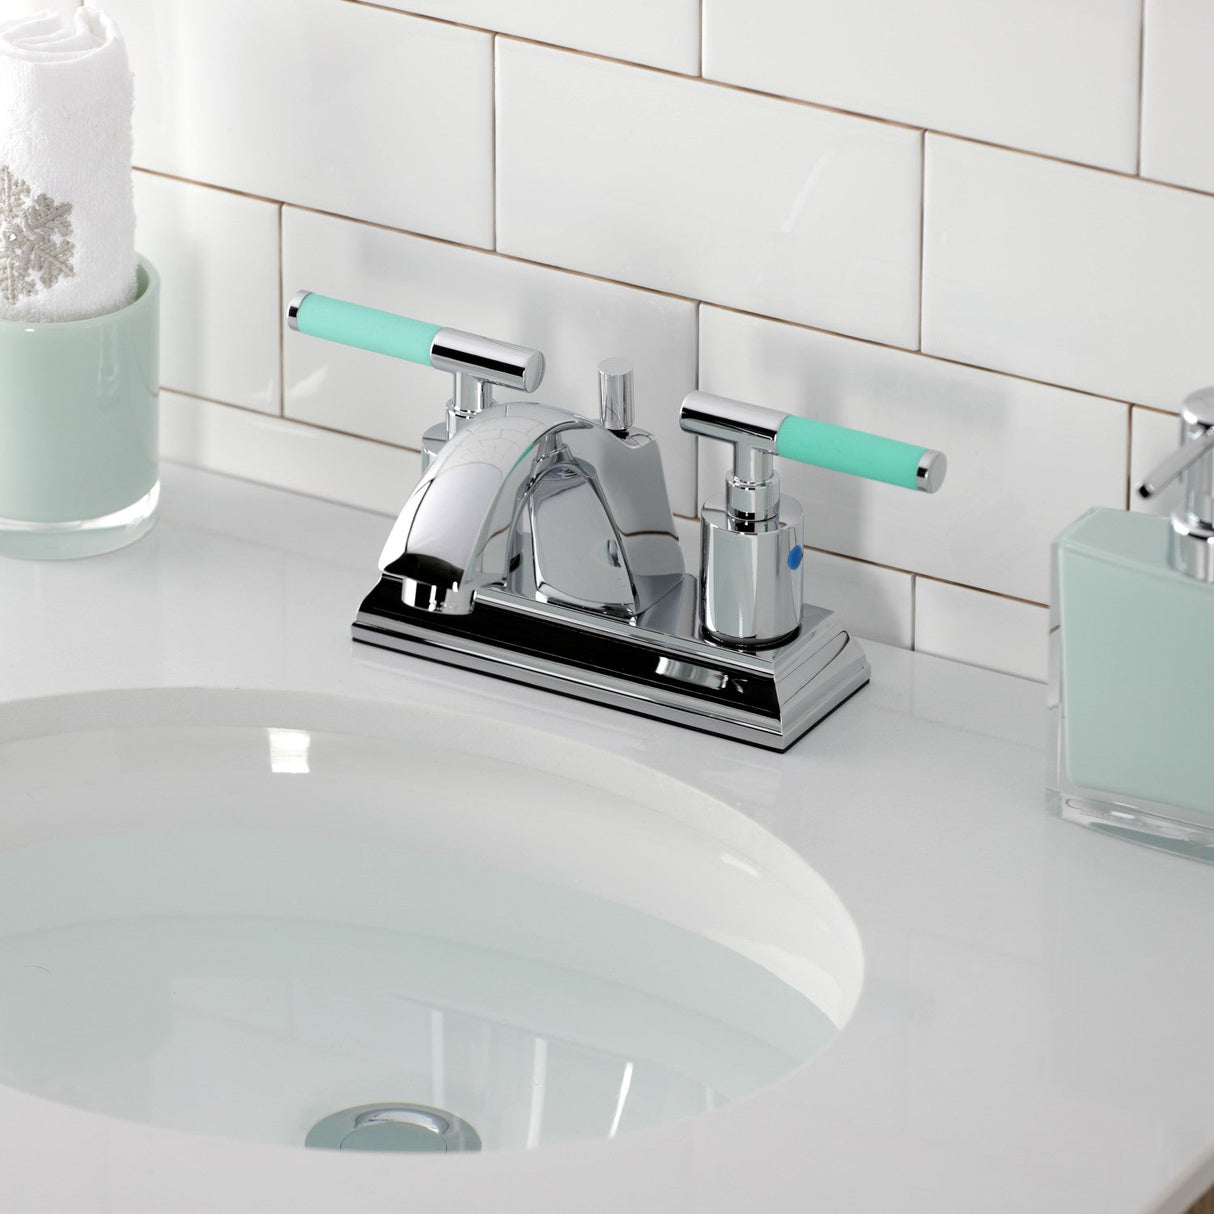 Kaiser FSC4641CKL Two-Handle 3-Hole Deck Mount 4" Centerset Bathroom Faucet with Pop-Up Drain, Polished Chrome